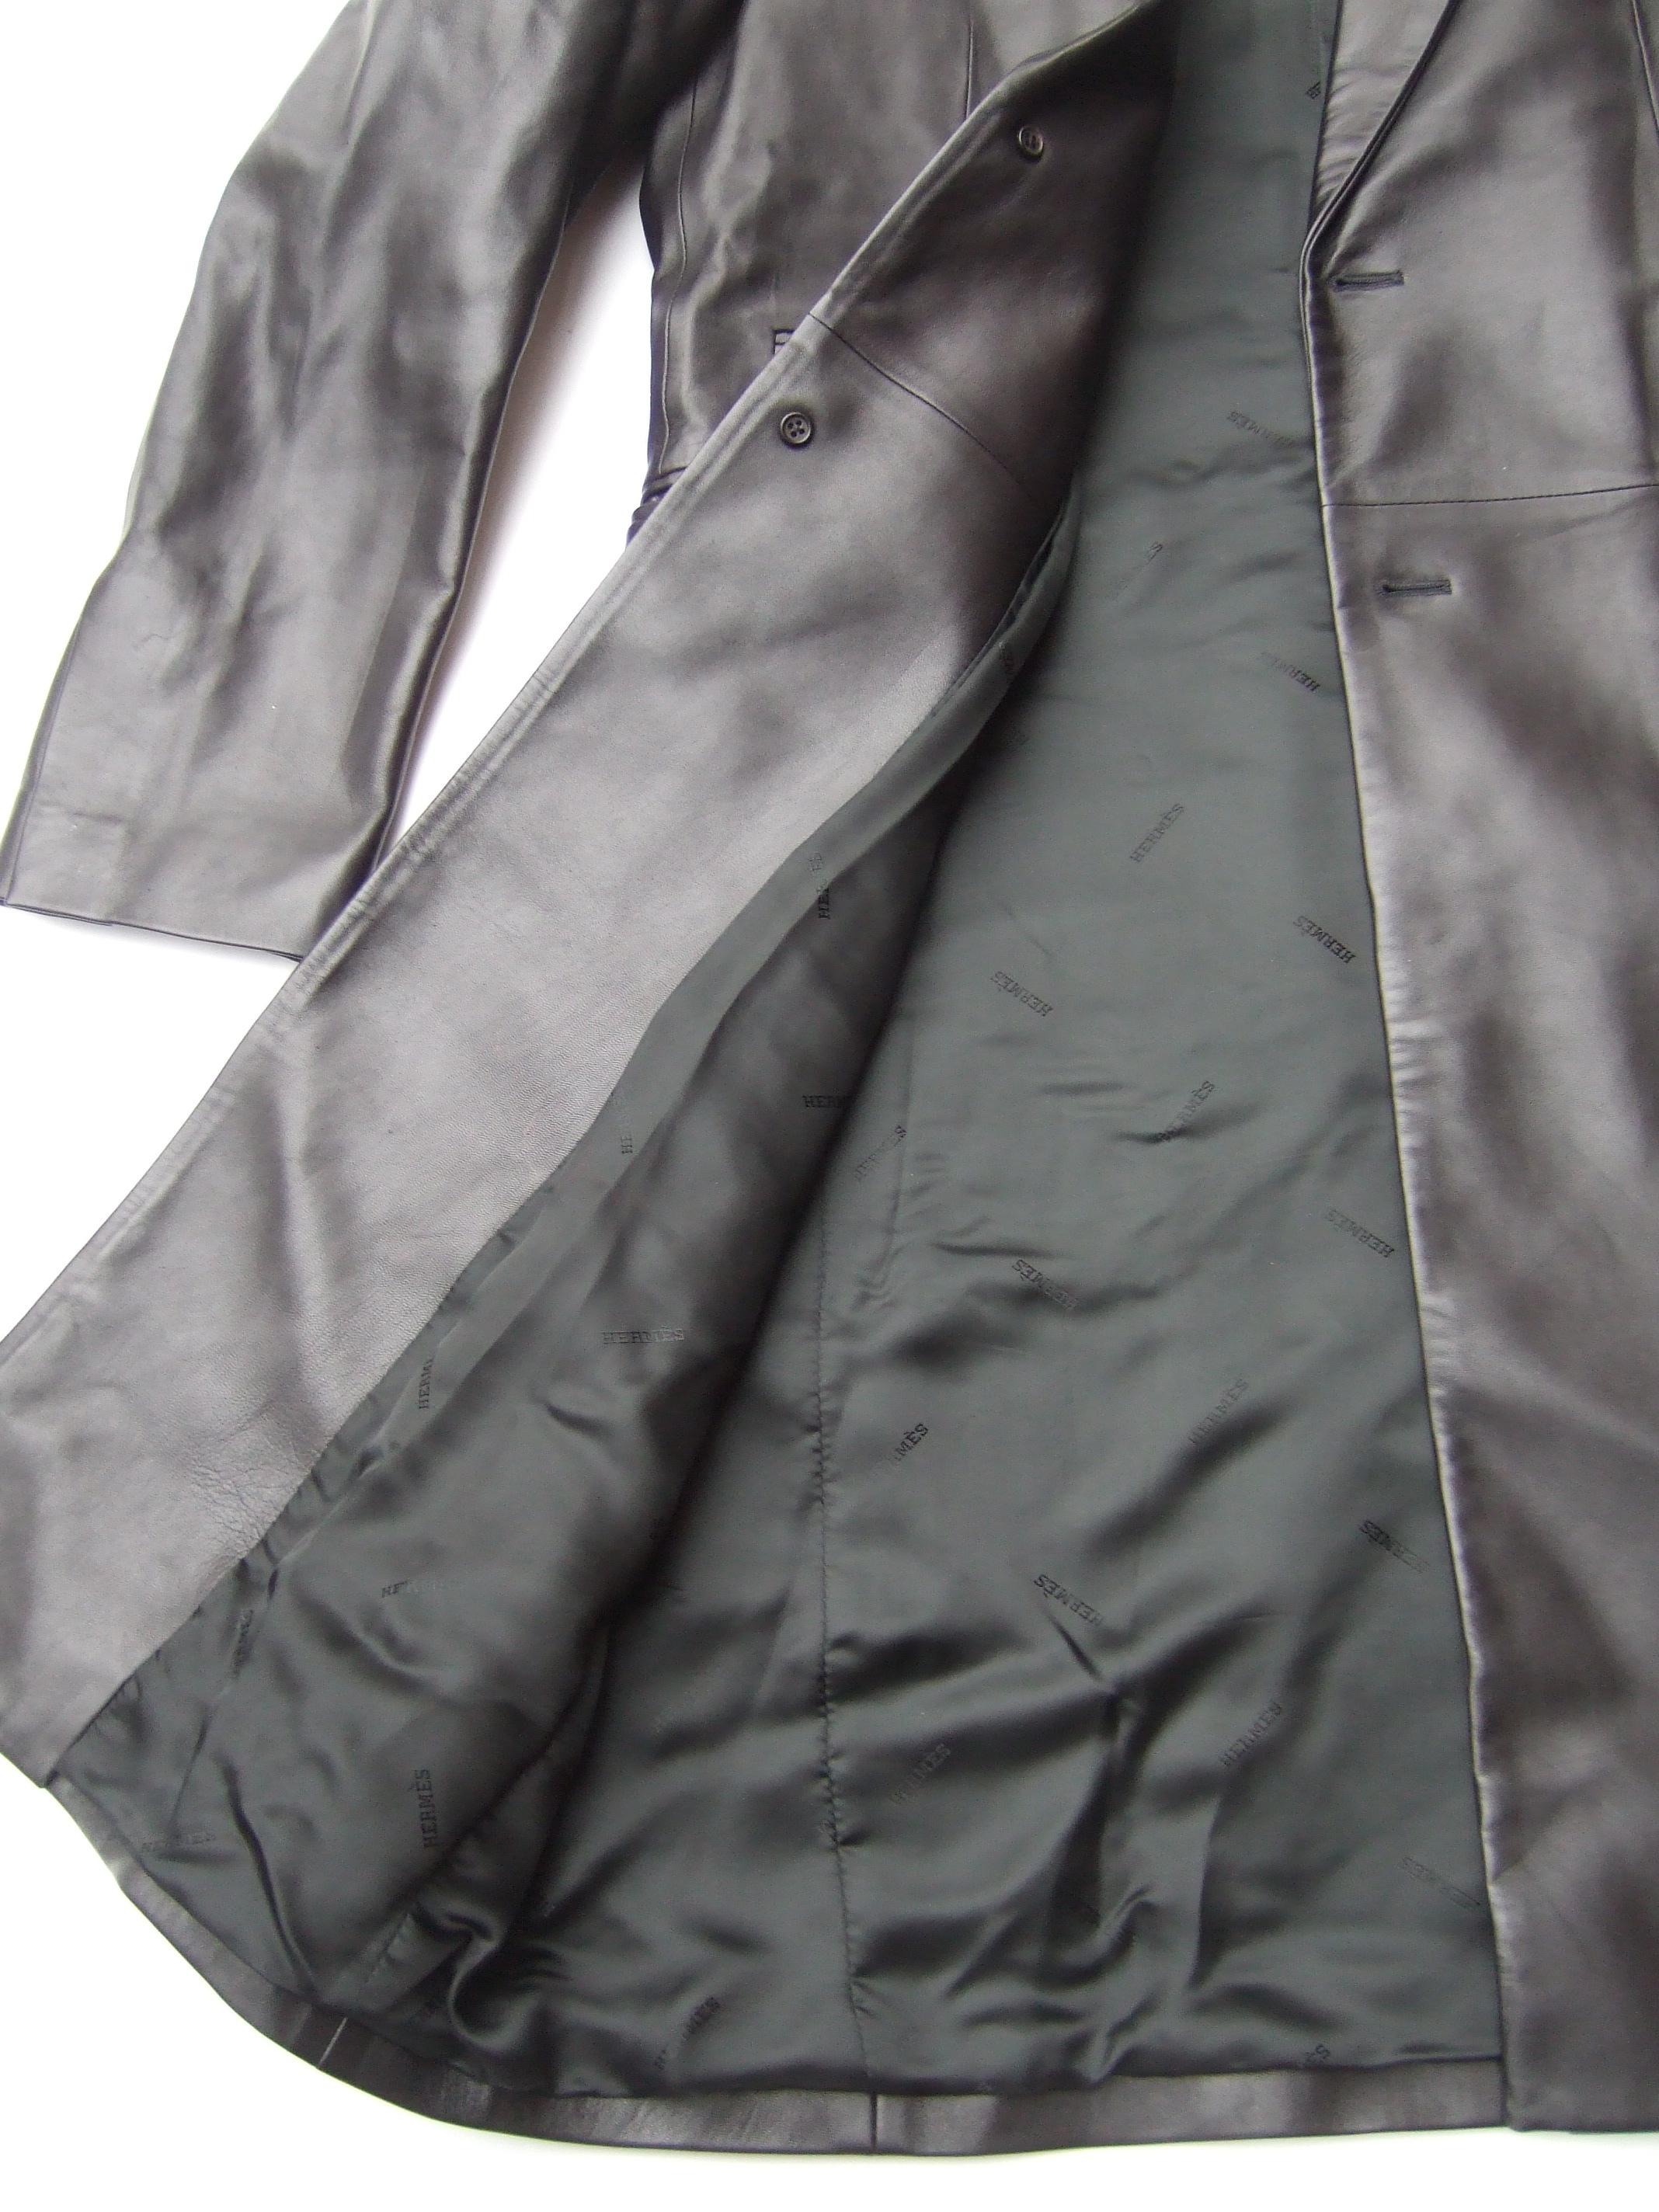 Hermes Men's Buttery Soft Black Lambskin Leather Unisex Coat Size 54 c 21st c  For Sale 7